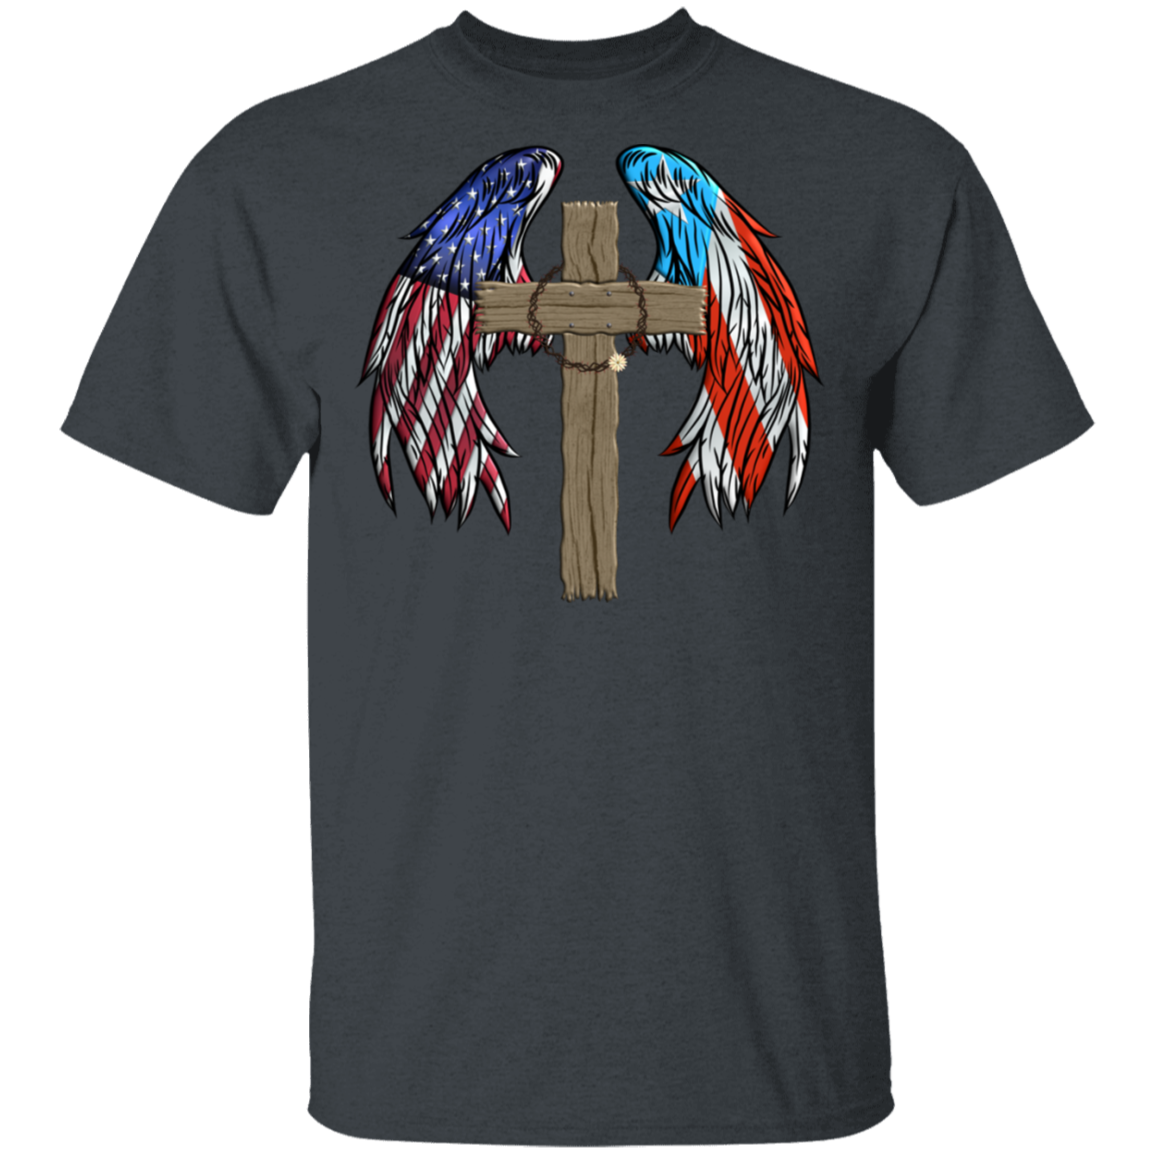 Duality Winged Cross 5.3 oz. T-Shirt